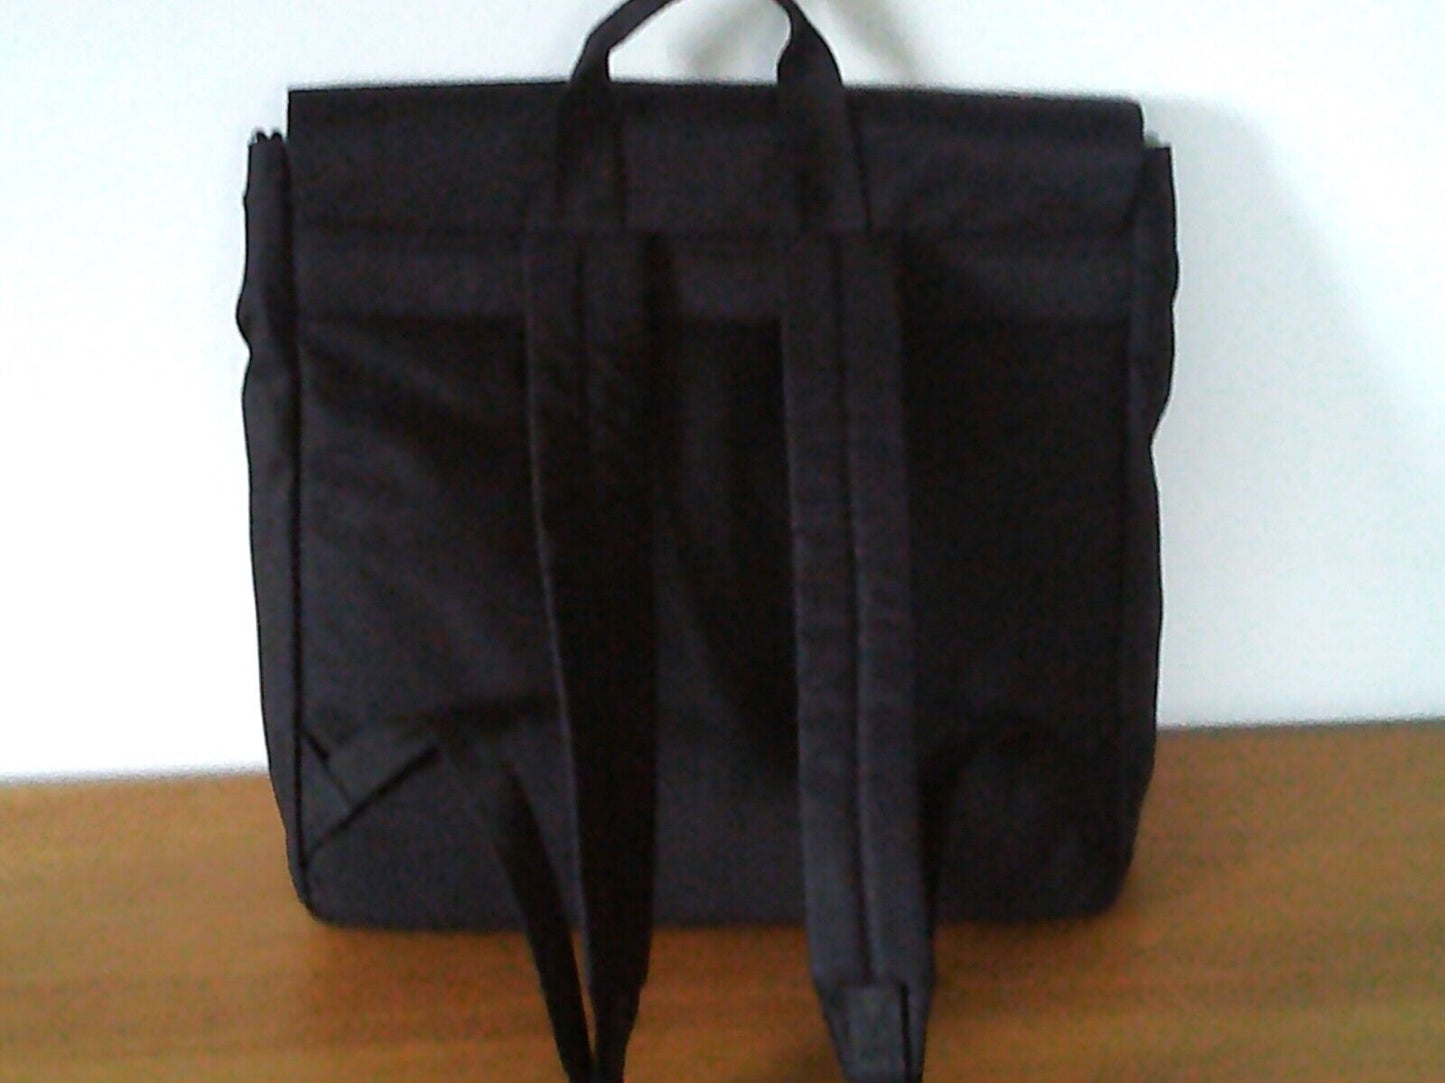 Gap extra large Backpack Sample